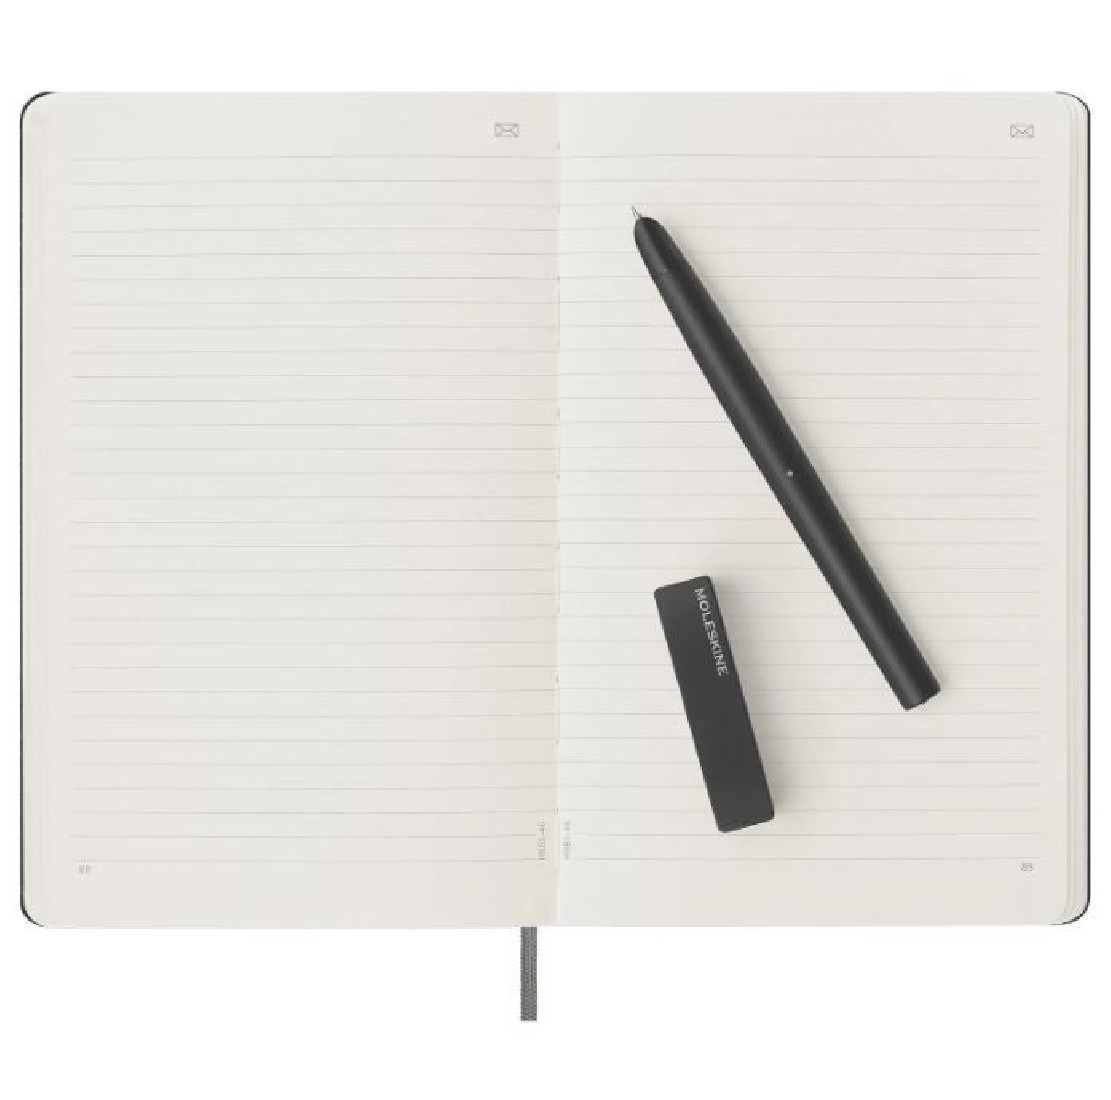 Moleskine Smart Writing Set Pen and Notebook